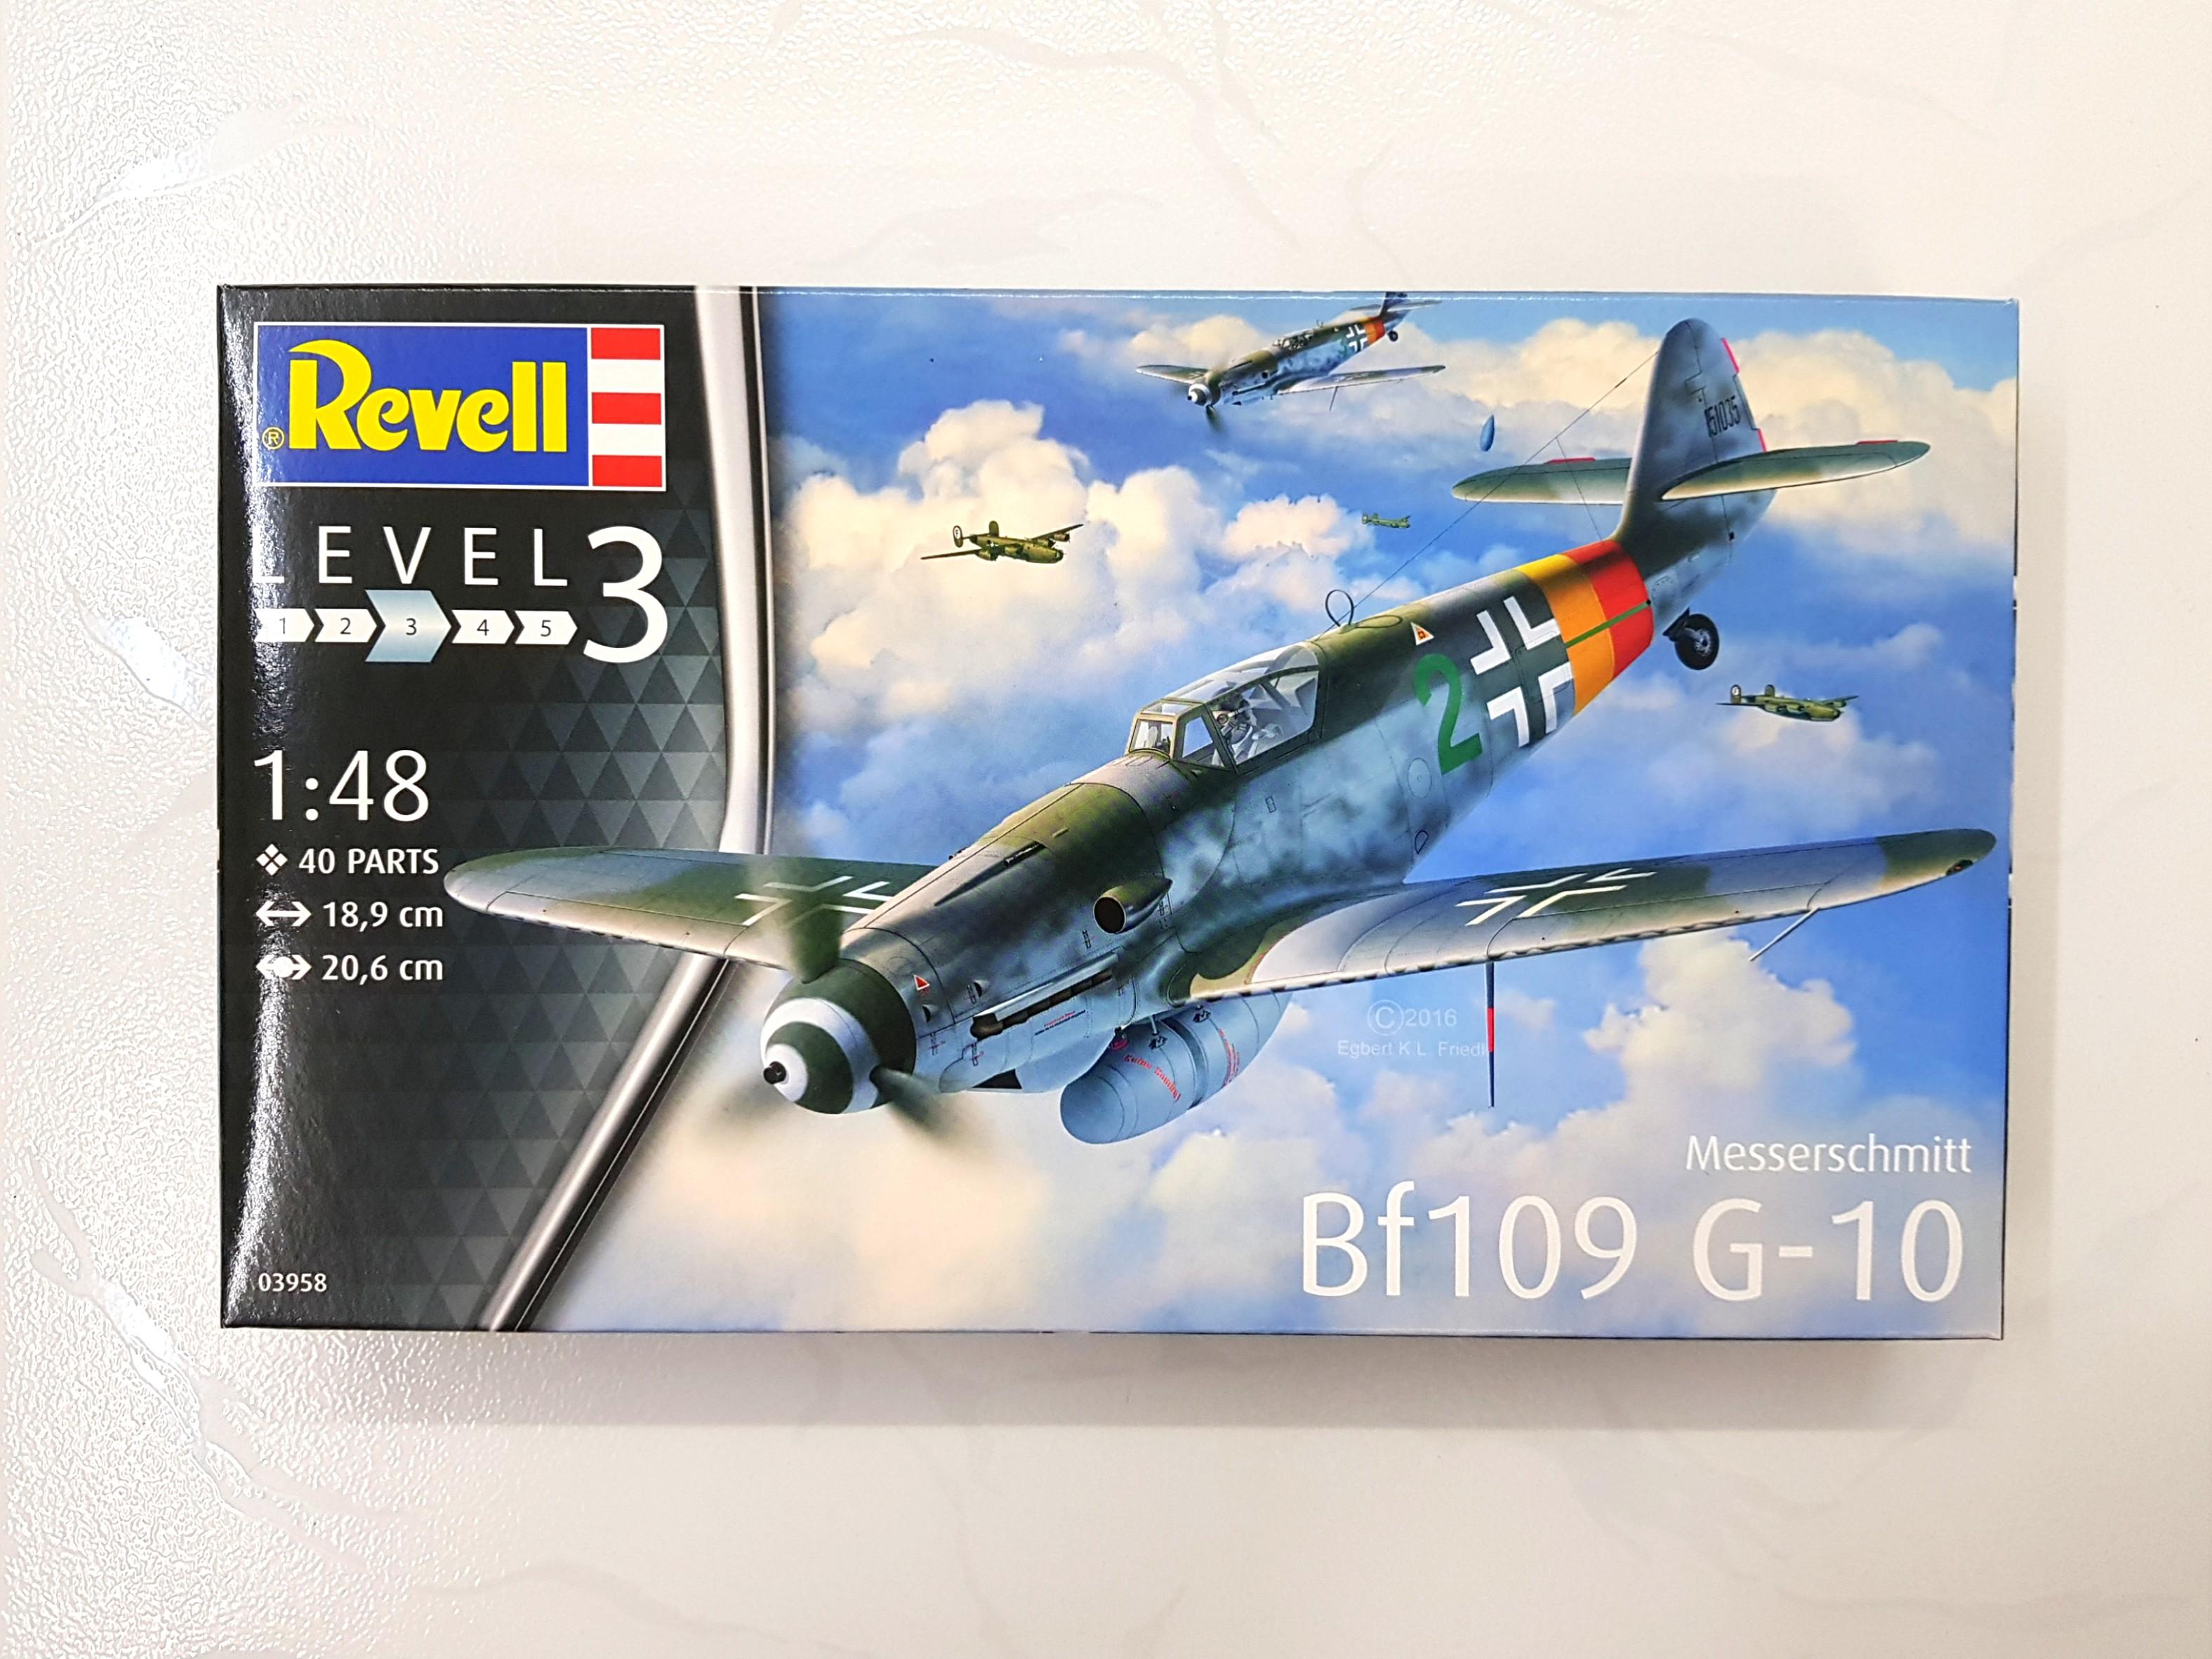 Revell 03958 Messerschmitt Bf109 G-10 Model Kit